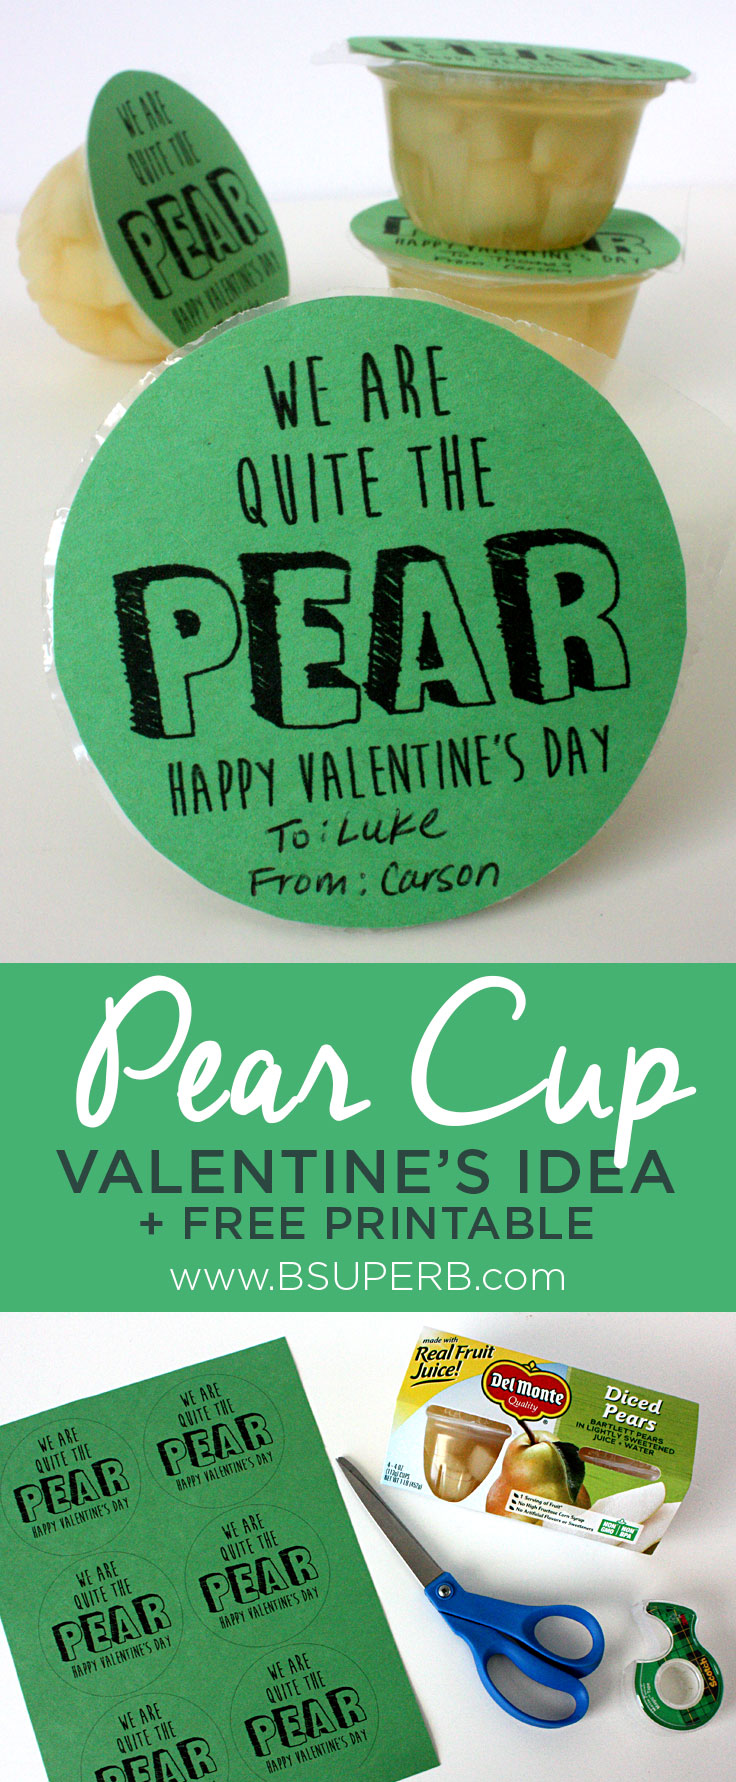 Pear Cup Valentine's Idea - Free Printable